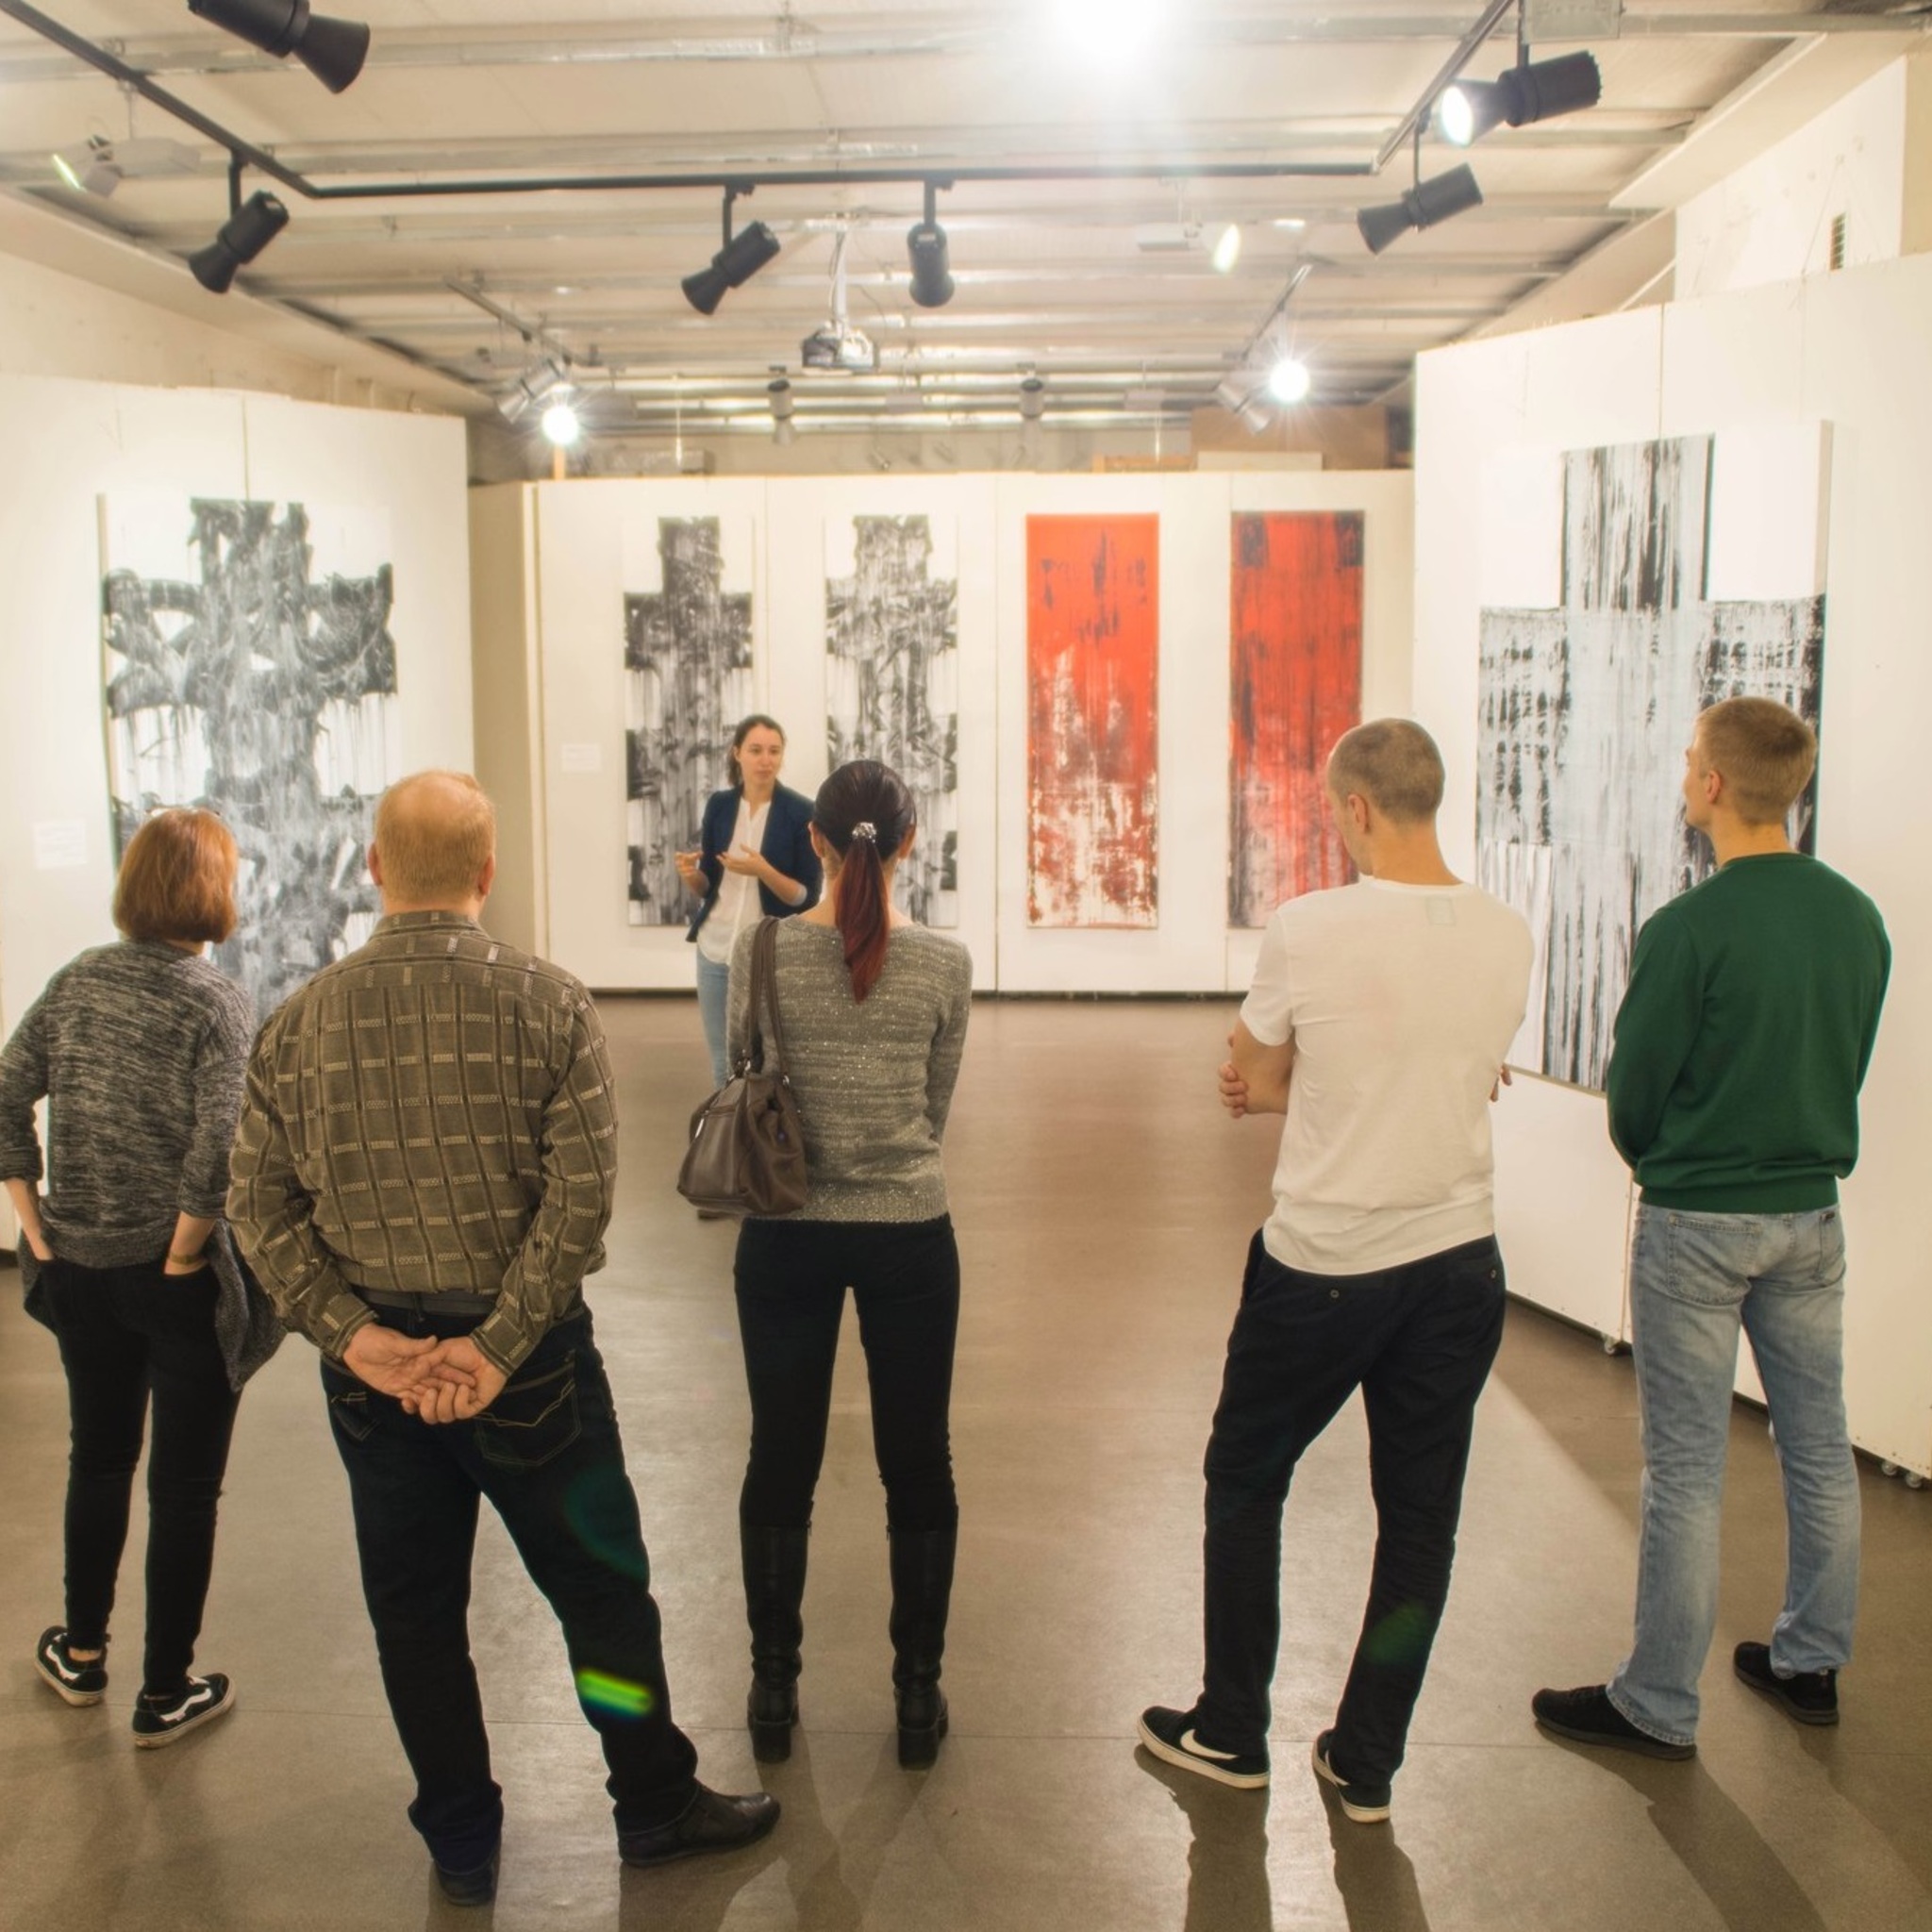 Program Art Center Pushkinskaya-10 on 18-20 December 2015